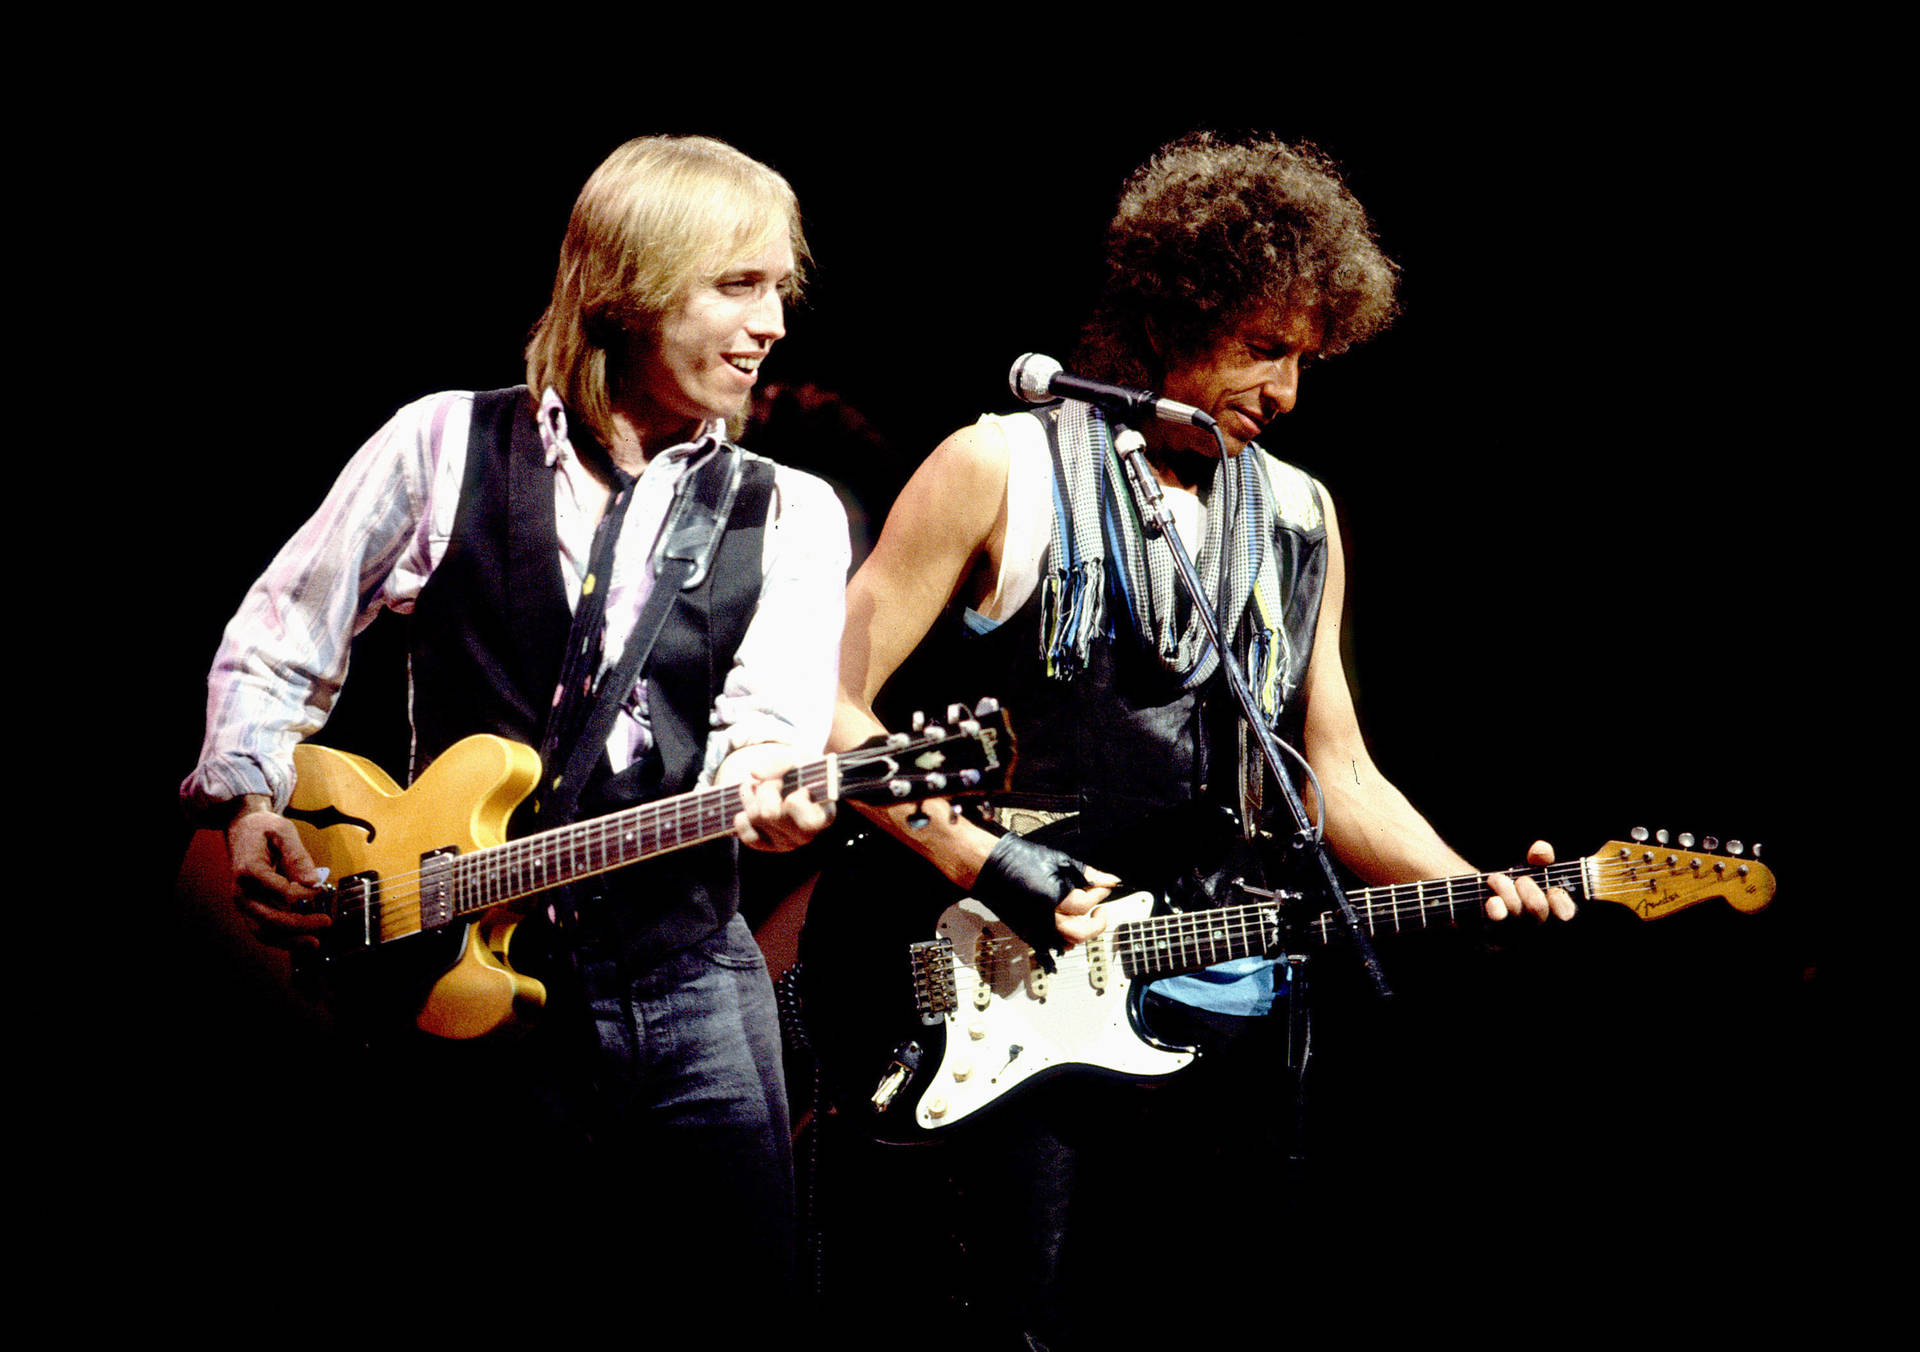 Amerikanischerockband Tom Petty And The Heartbreakers 1986 Performance. Wallpaper